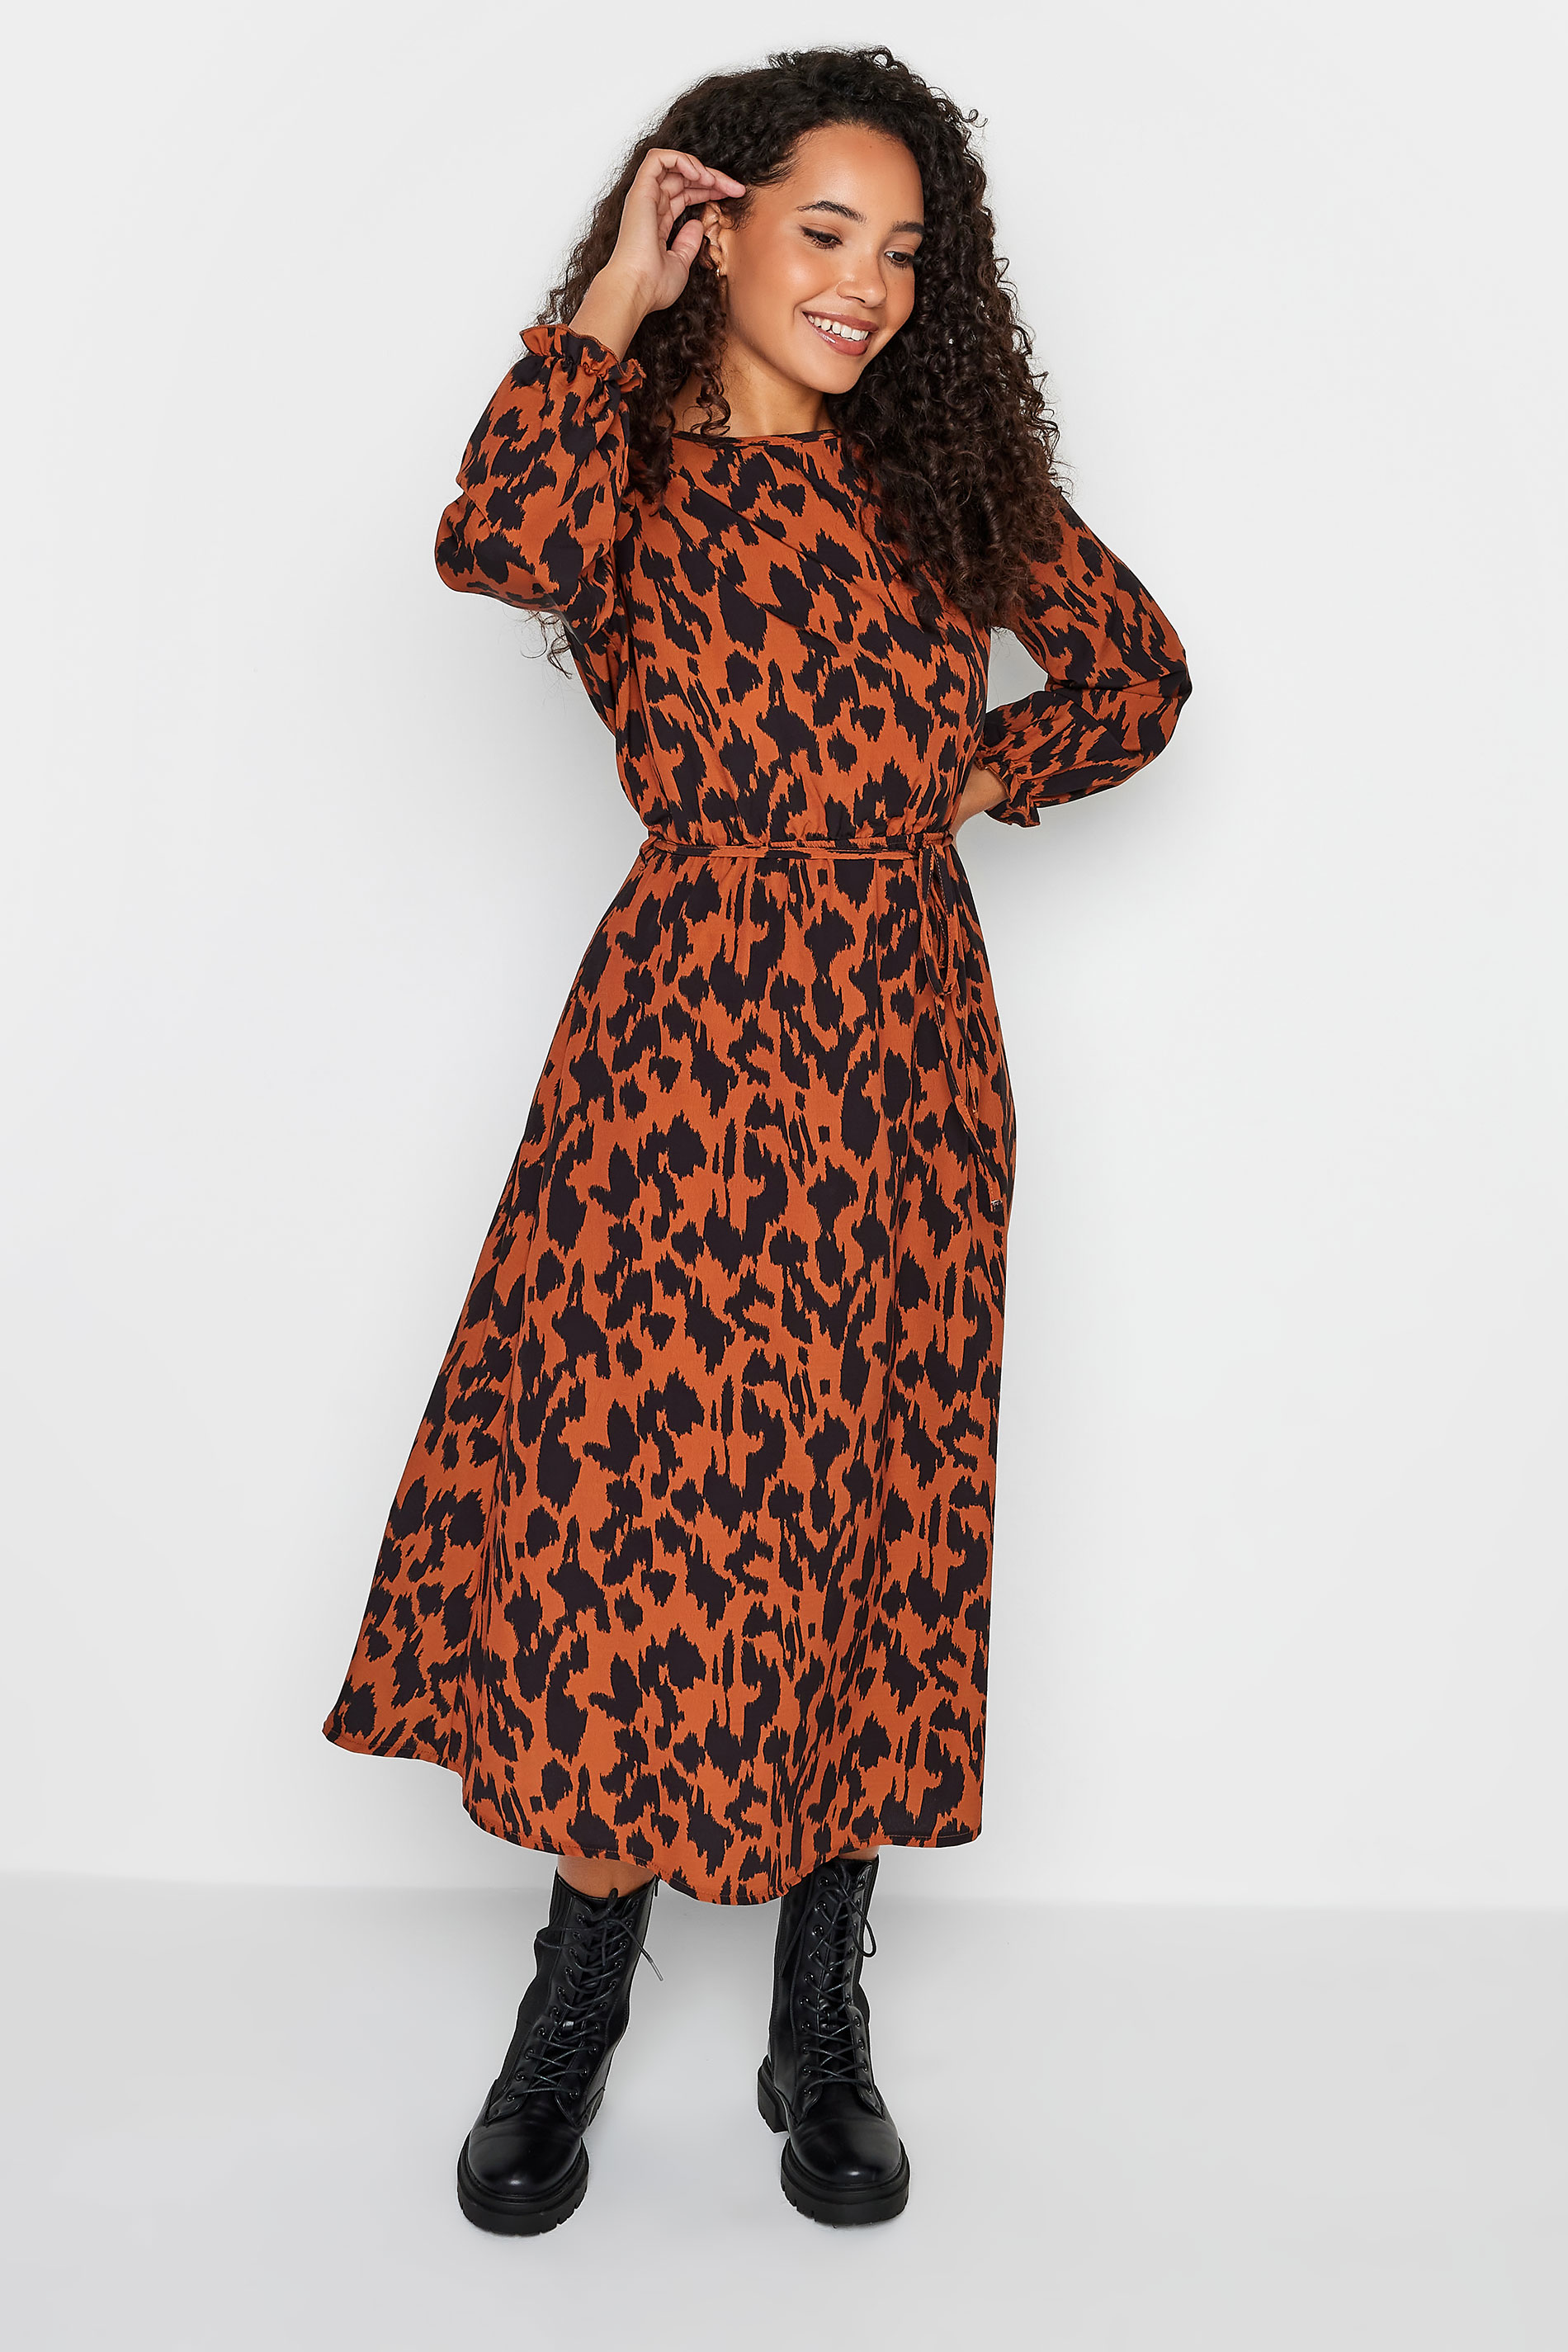 M&Co Brown Leopard Print Smock Dress | M&Co 3